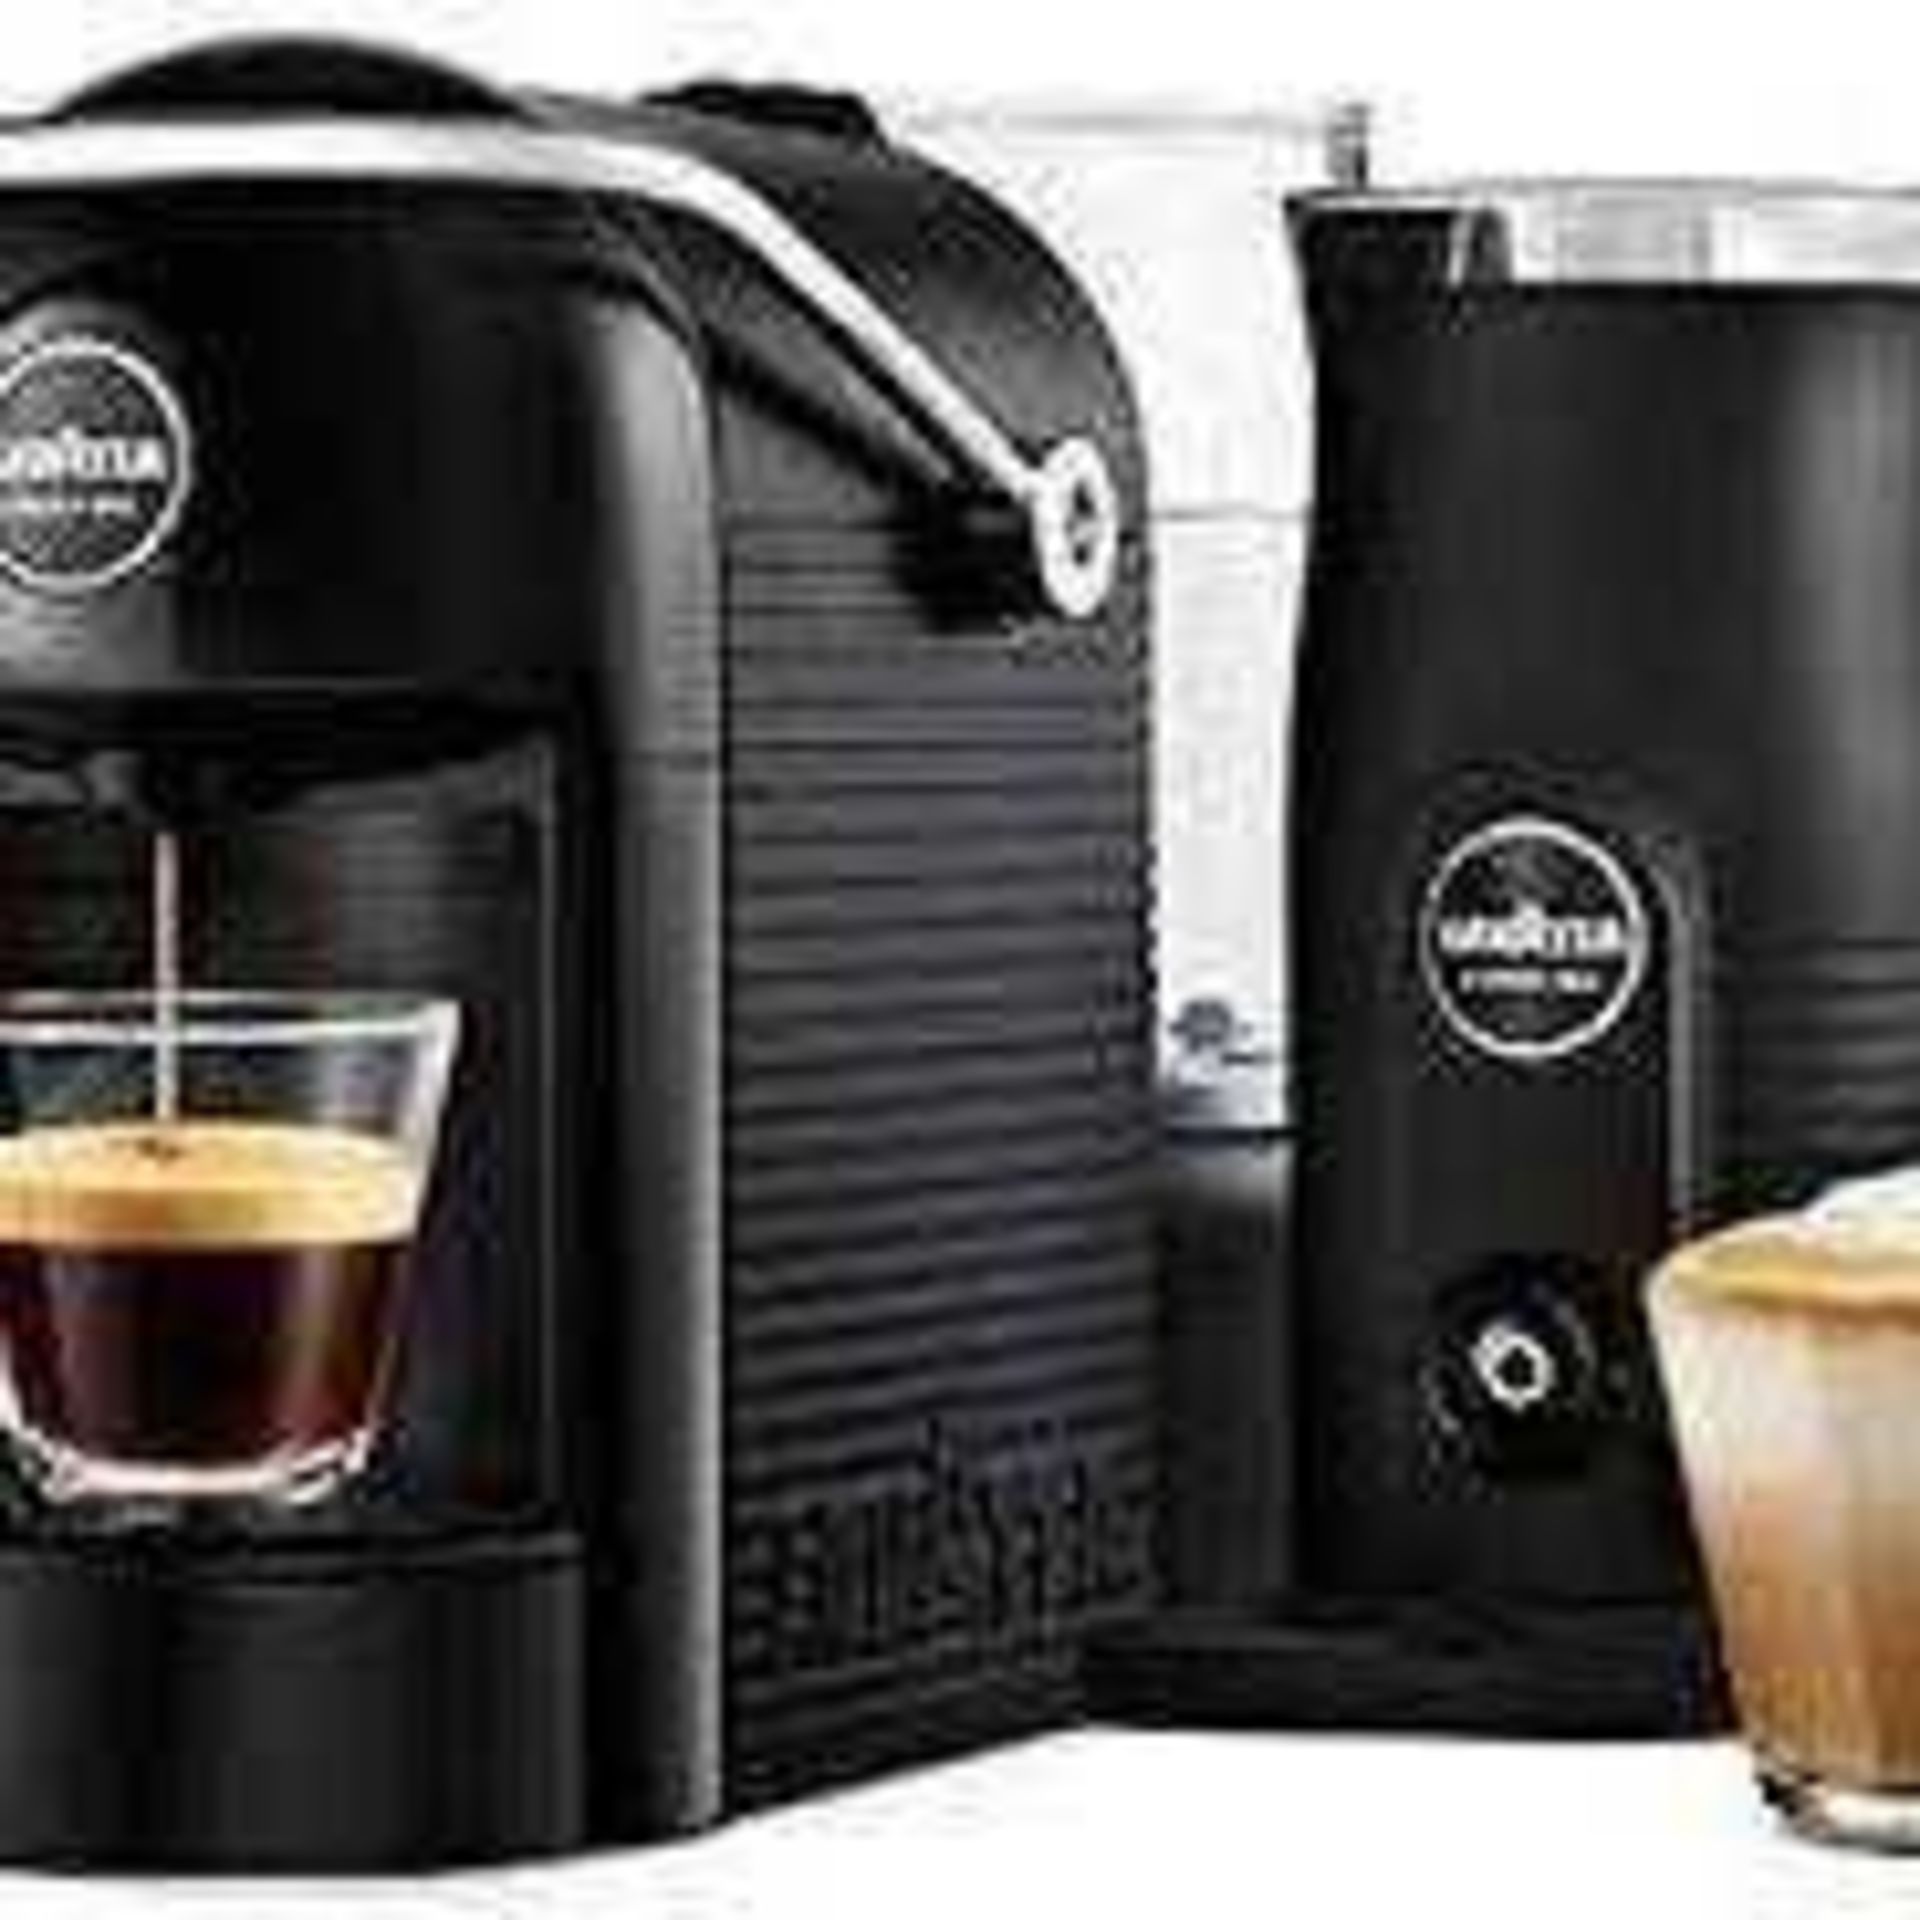 RRP £130 Unboxed Lavazza Jolie&Milk Coffee Machine